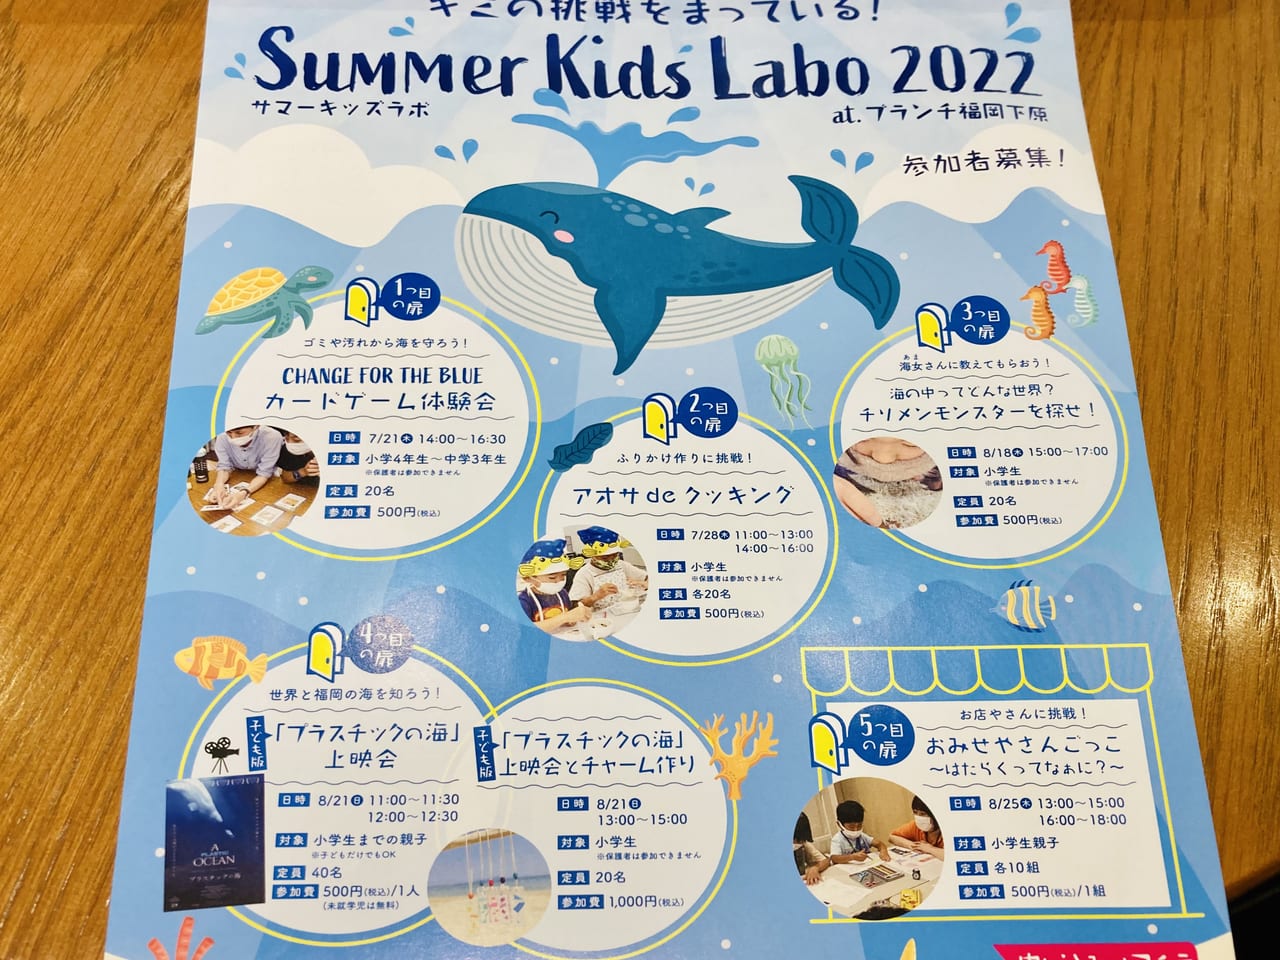 Summer Kids Labo 2022